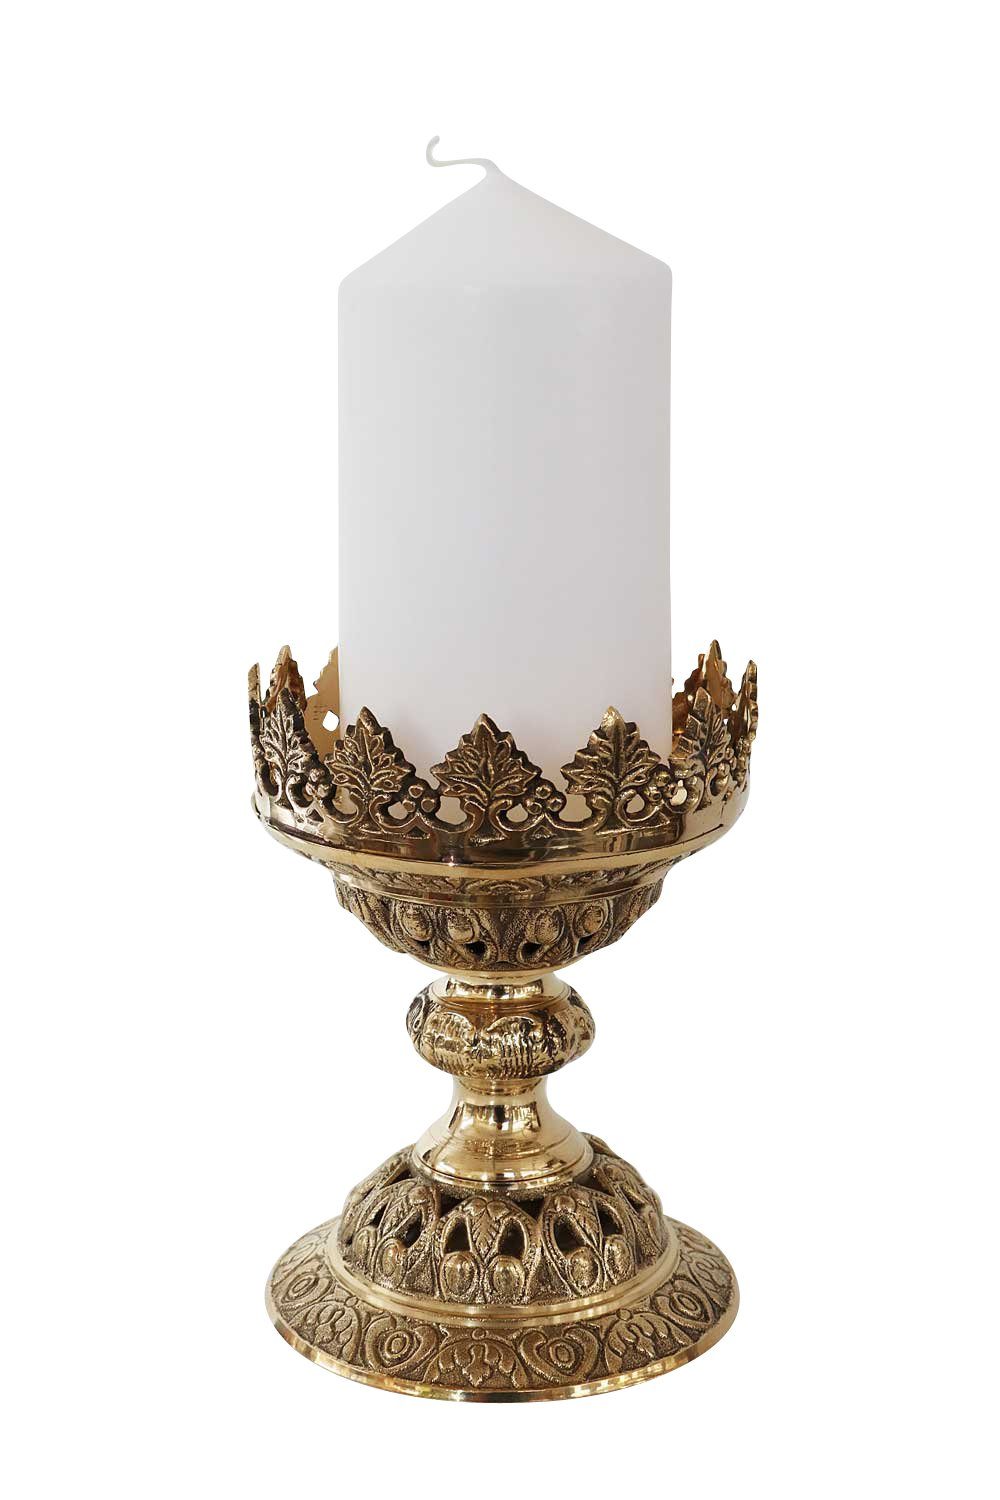 Antik-Stil Altarleuchter Kerzenleuchter go Kerzenständer 16cm Aubaho Leuchter Kerzenständer